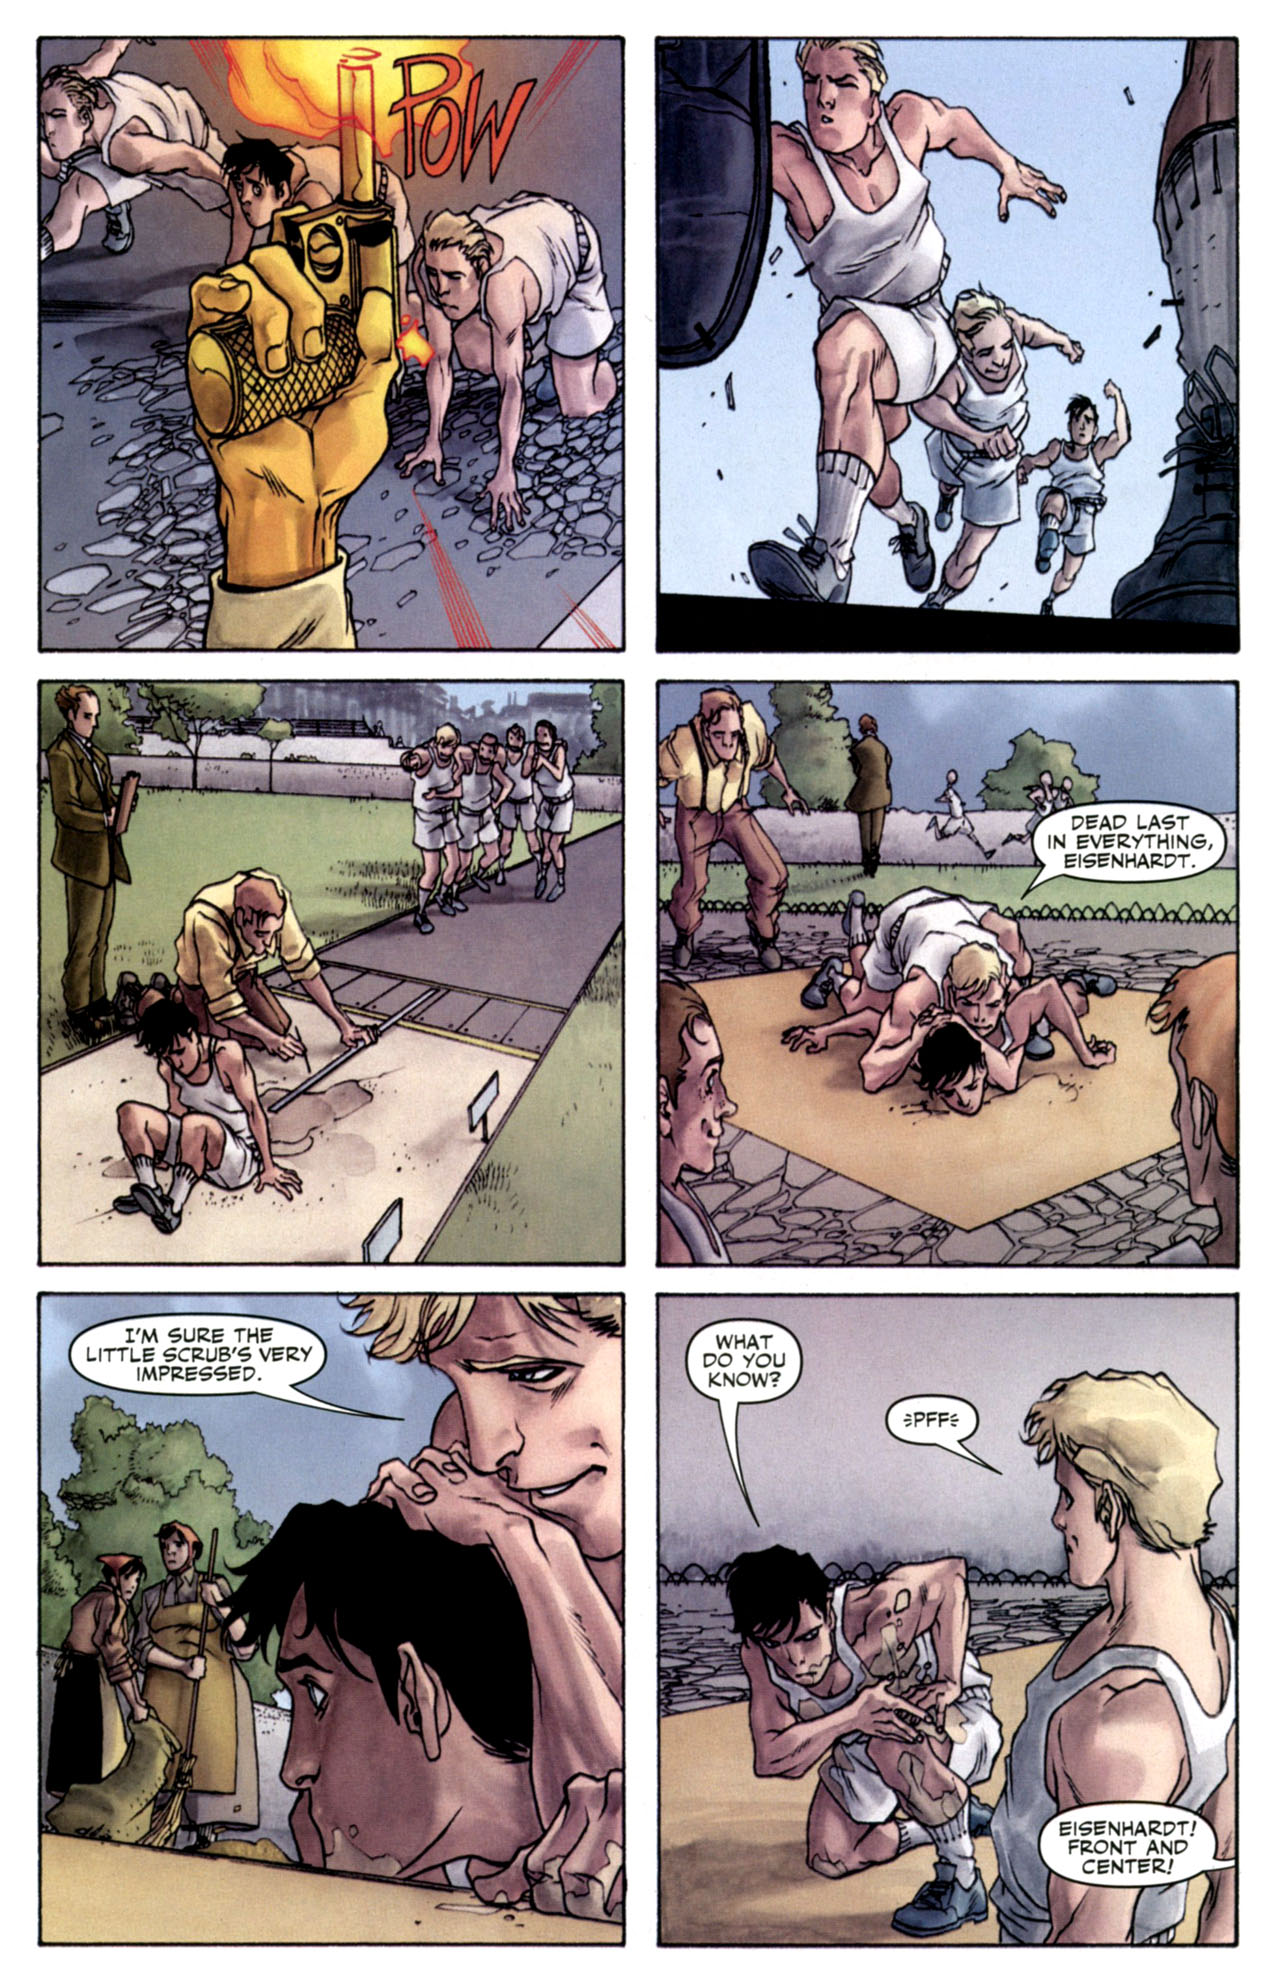 X-Men: Magneto Testament #1 - Part 1 of 5 